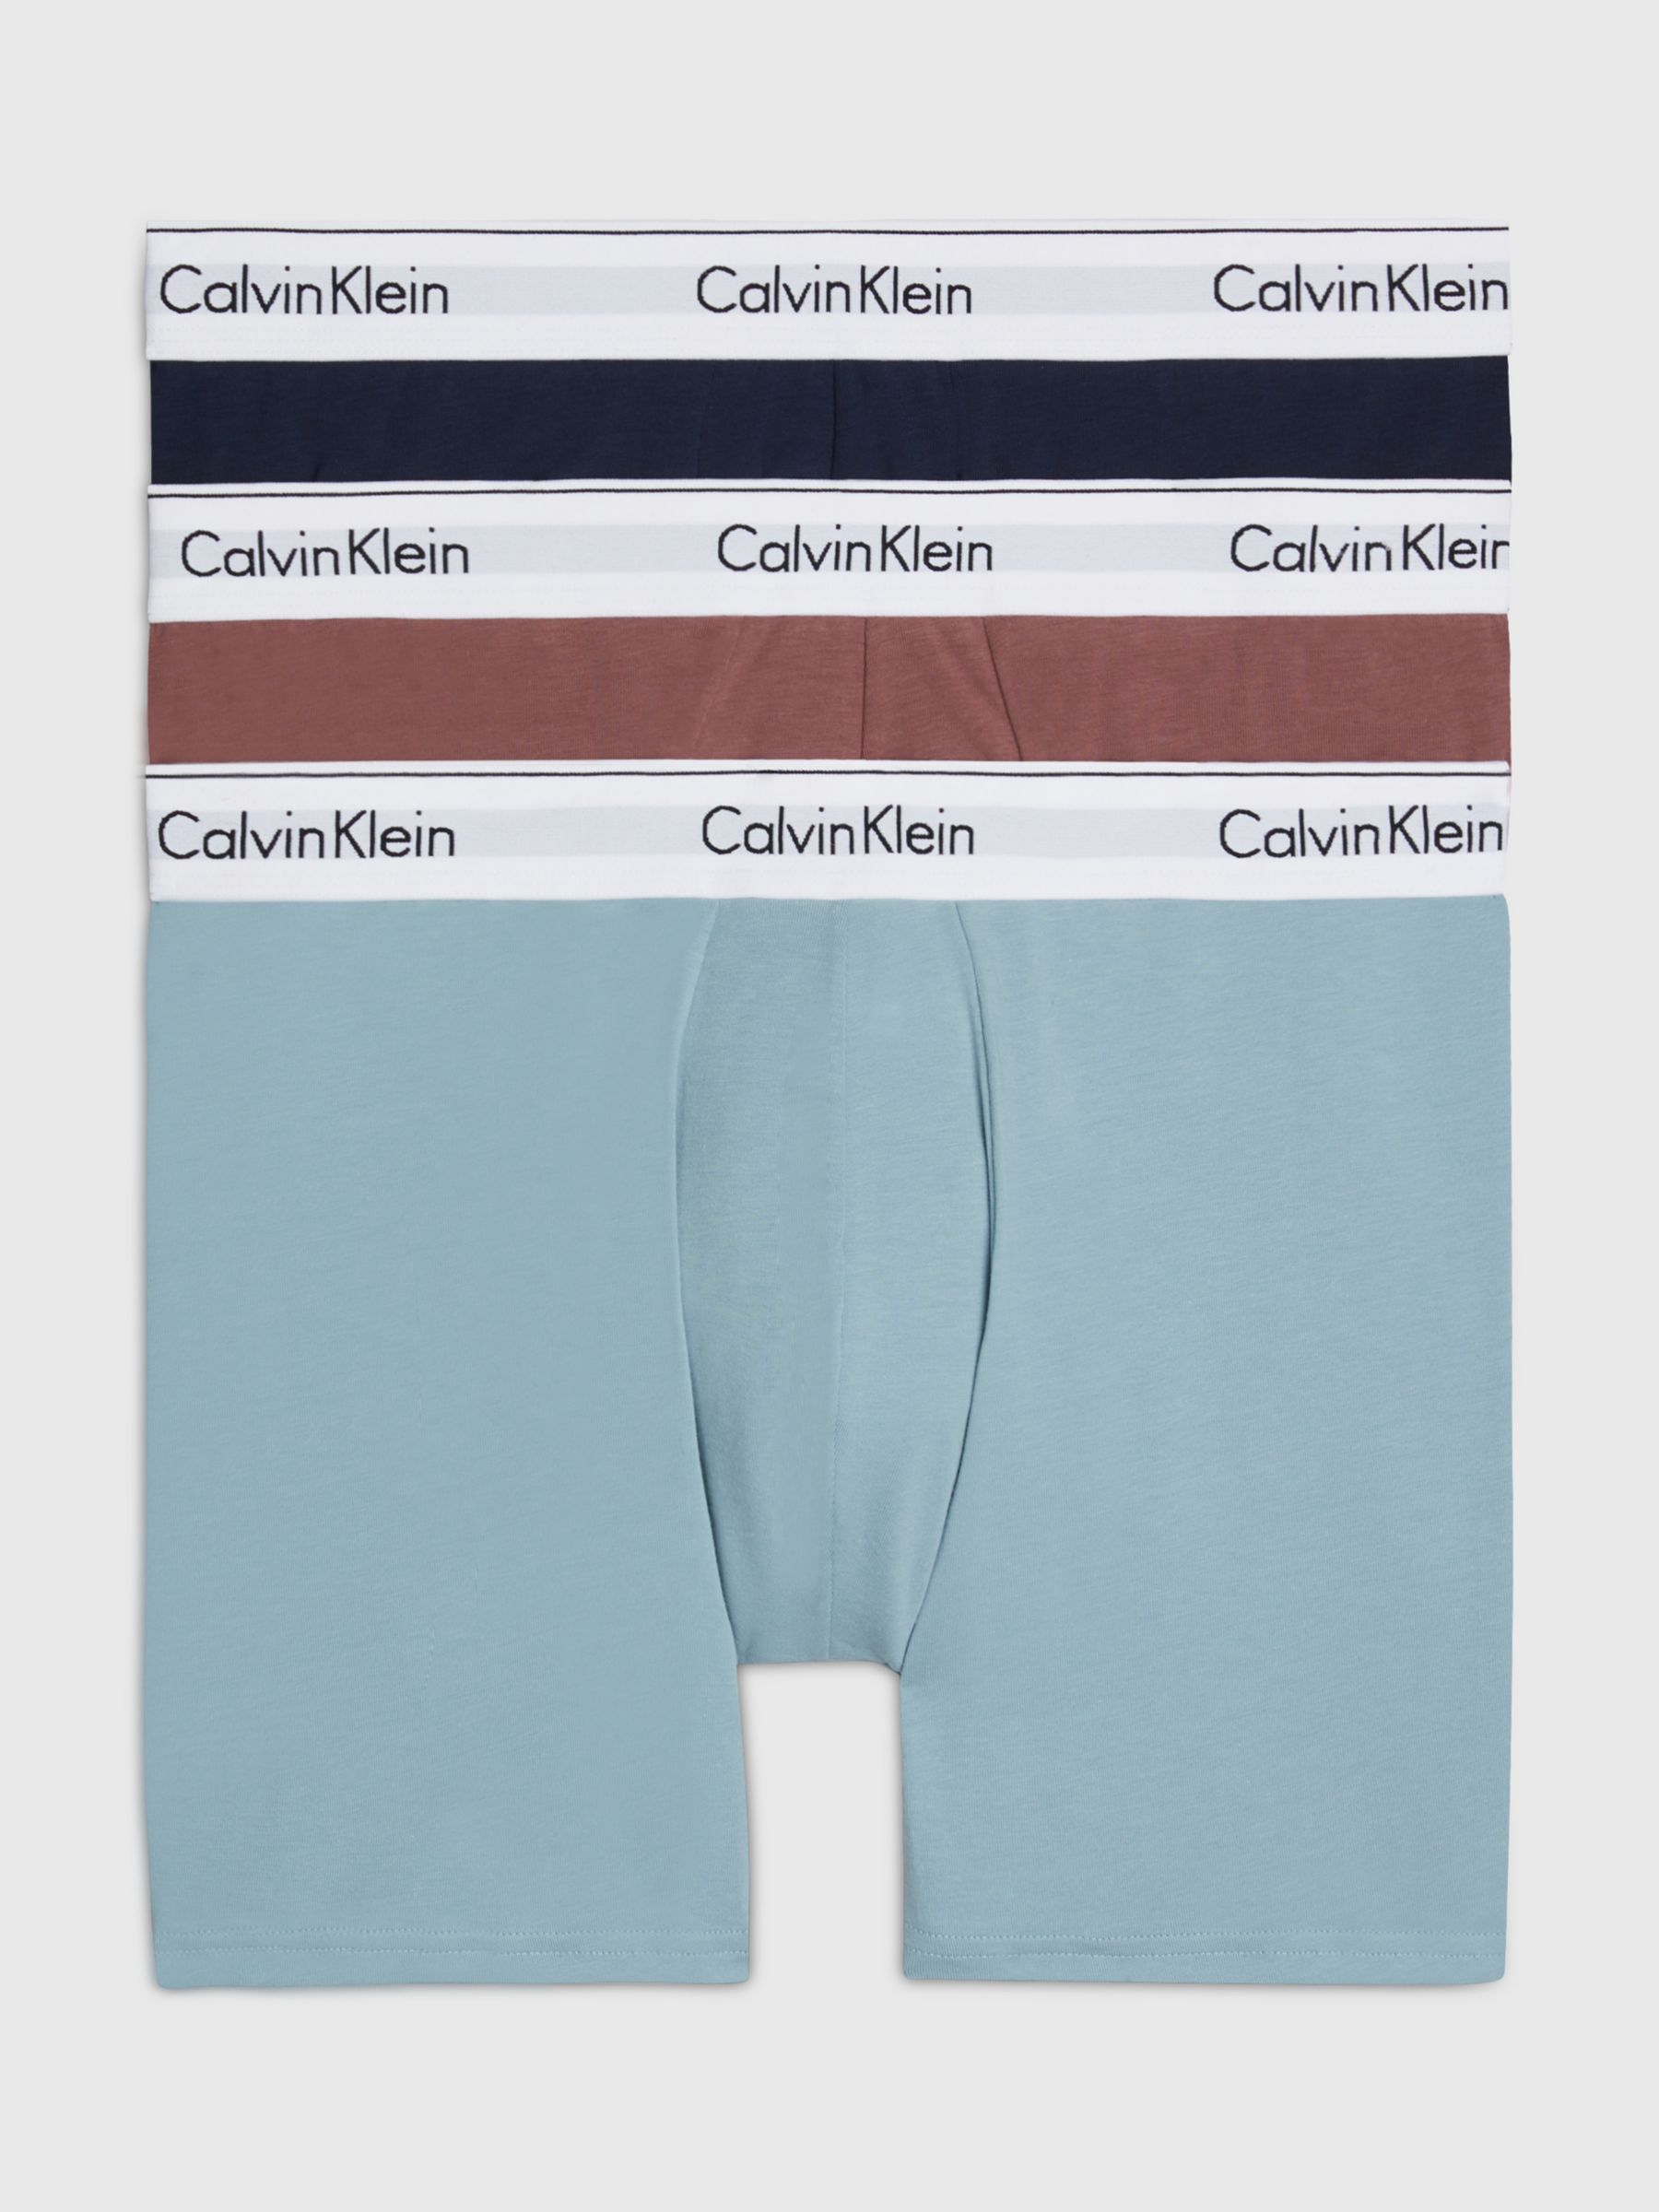 Calvin Klein Cotton Stretch Boxer Brief, Pack of 3, Rose/Blue/Arona, S